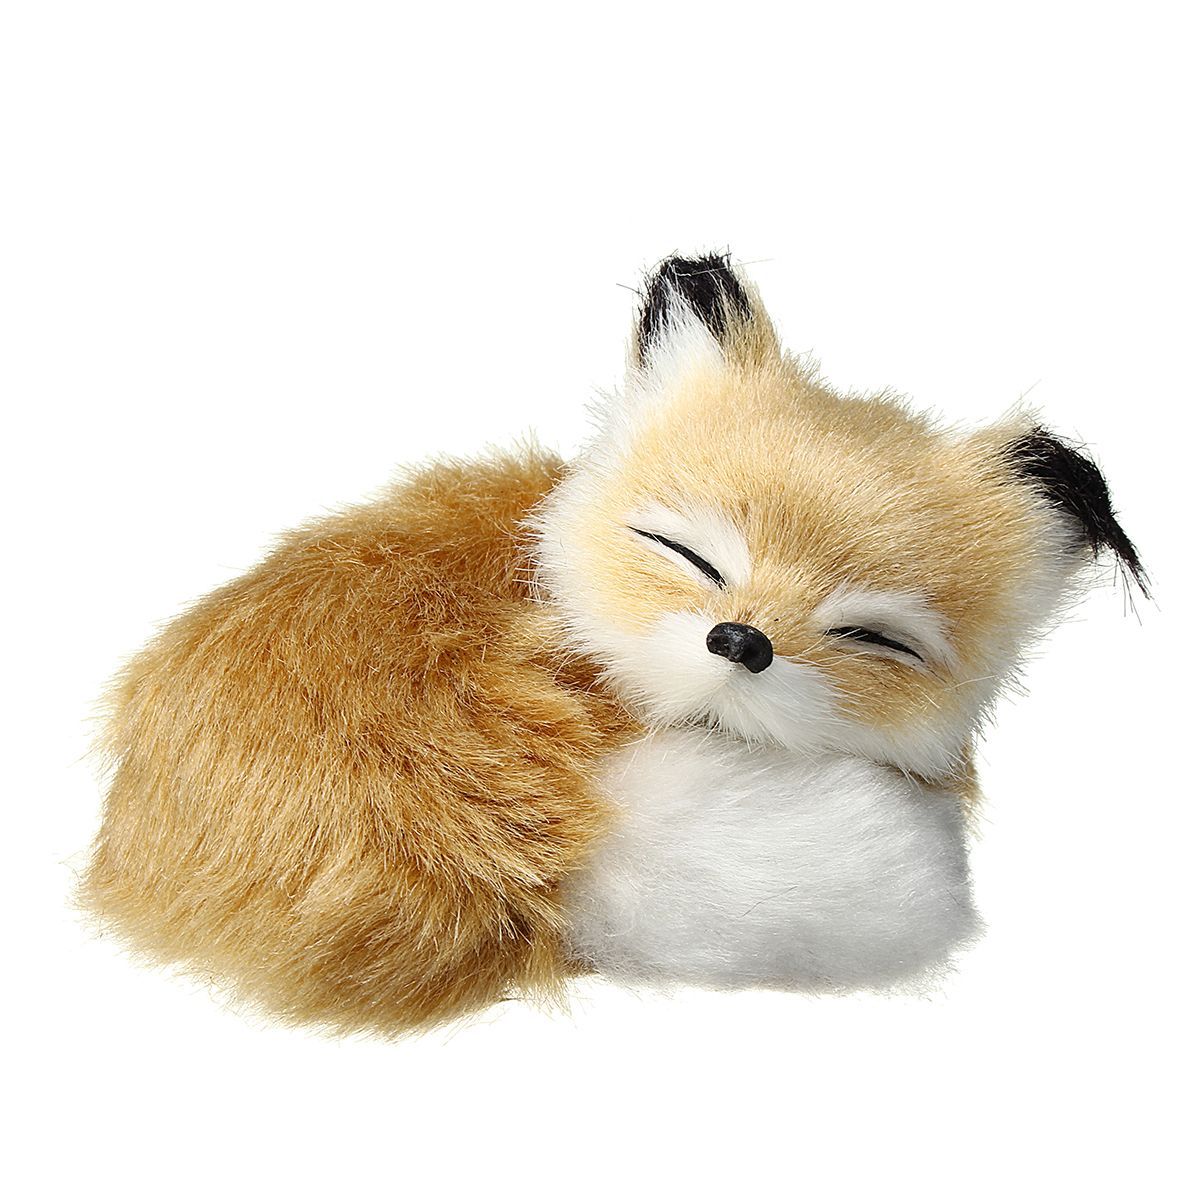 Cute-Plush-Stuffed-Little-Animal-Sitting-Sleeping-Simulation-Toy-Animal-Birthday-Gift-Home-Decoratio-1458409